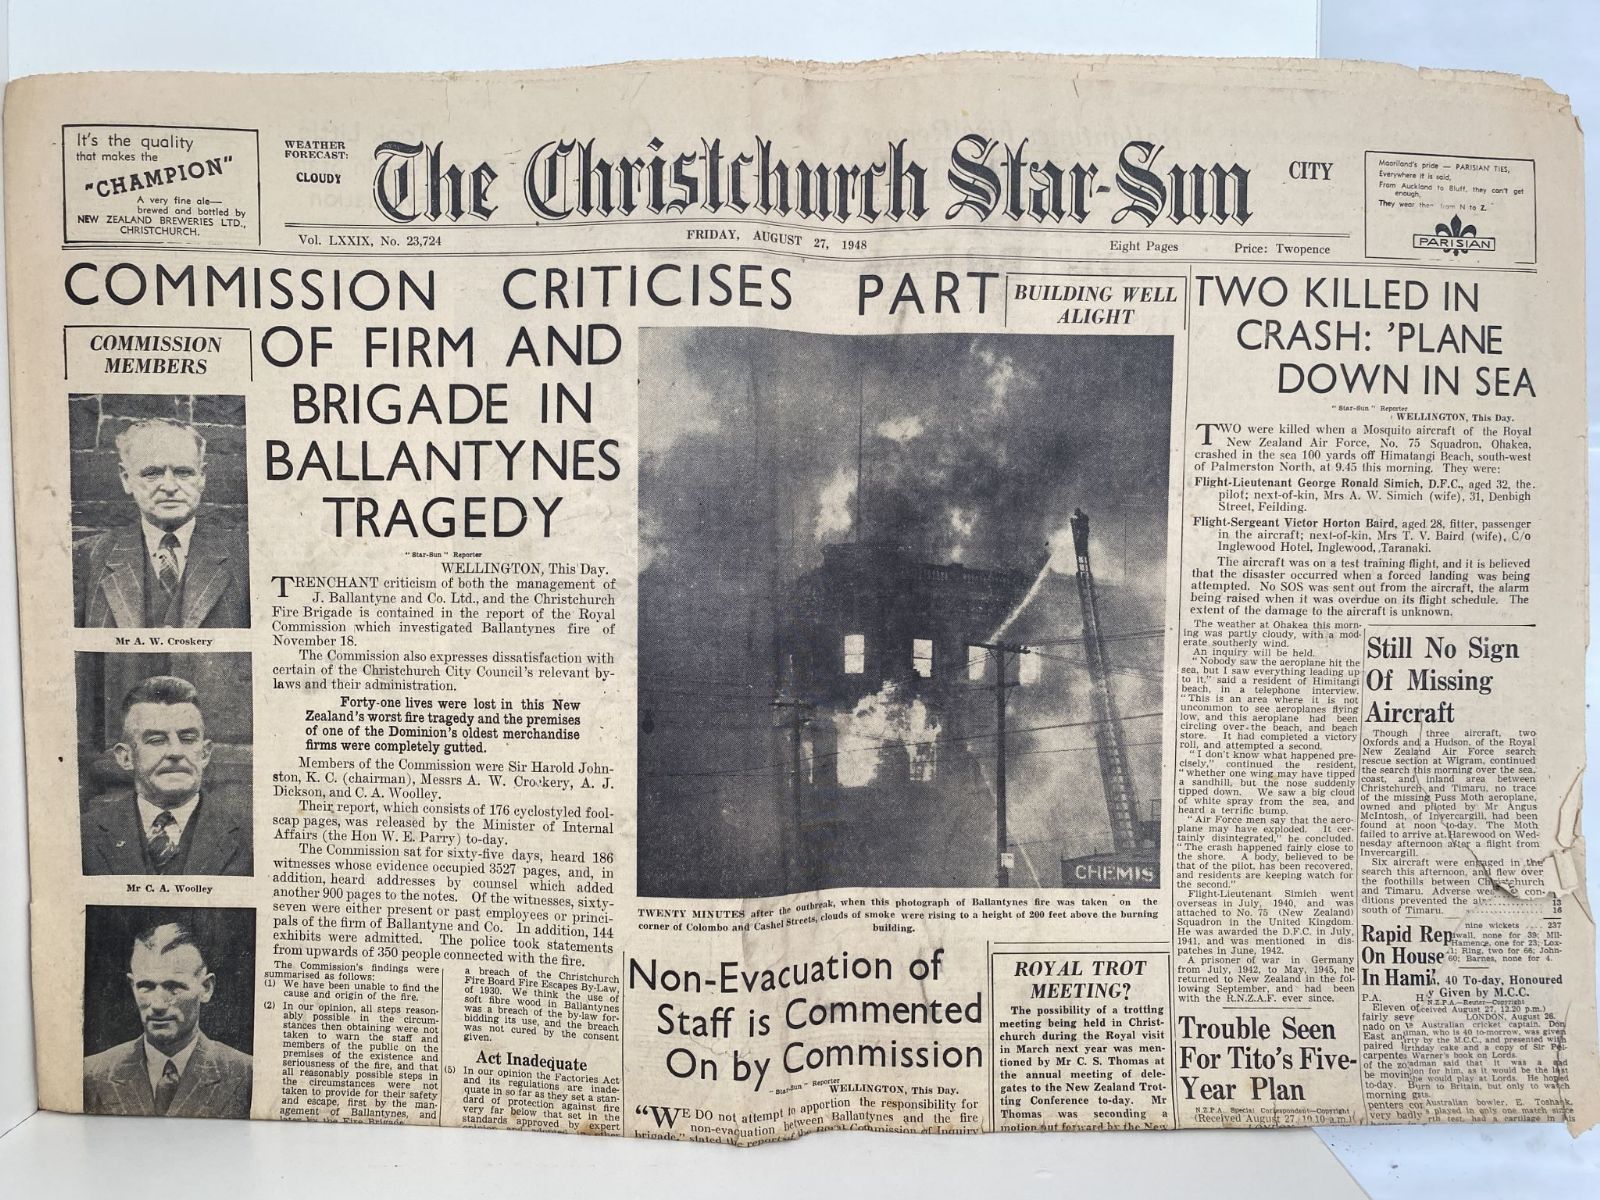 OLD NEWSPAPER: The Christchurch Star-Sun, 27 August 1948 - Ballantynes Fire